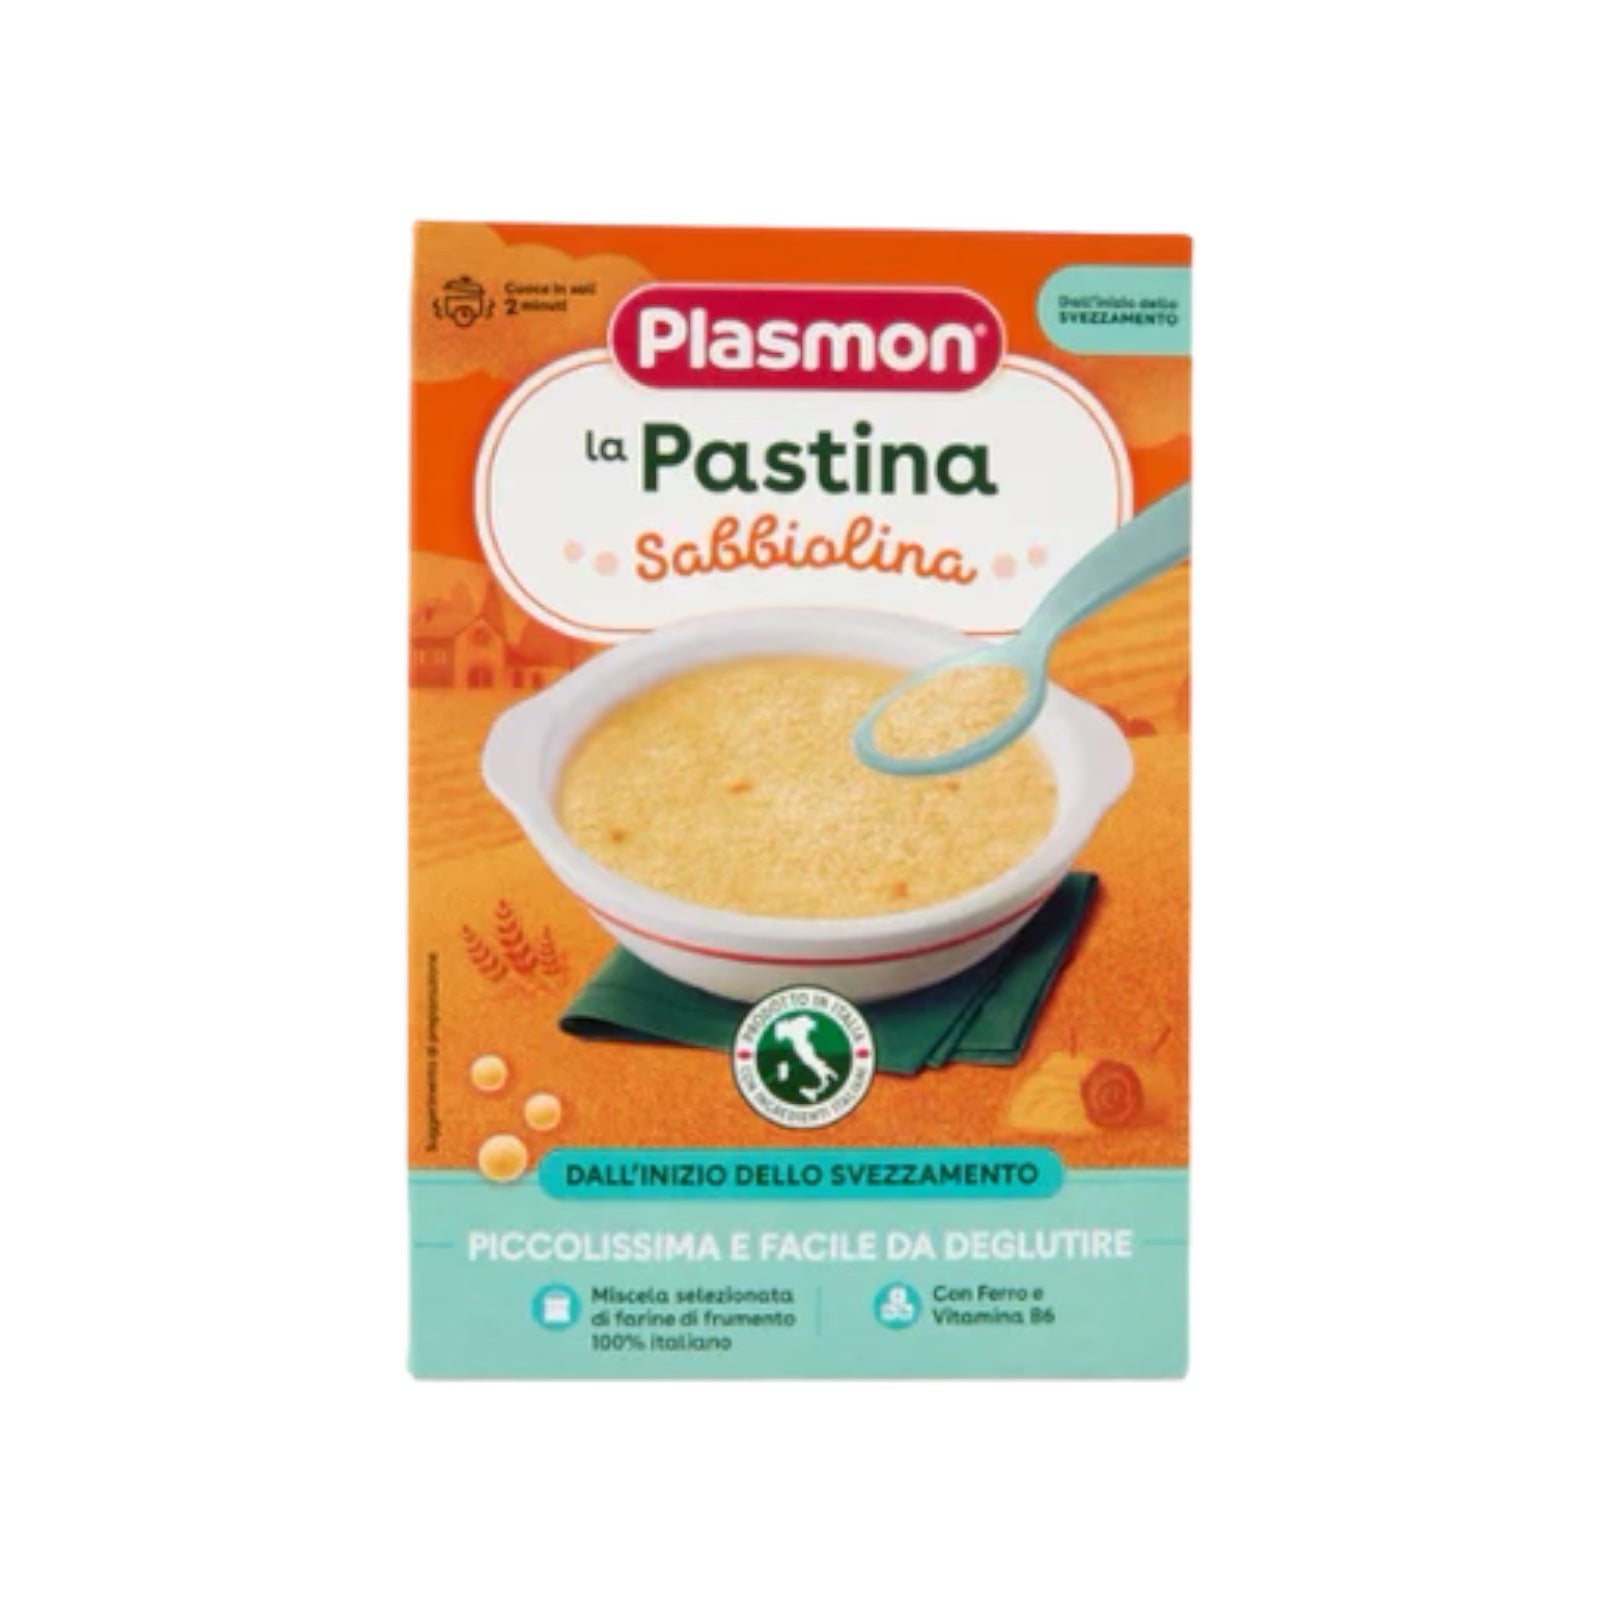 Plasmon La Pastina Sabbiolina 340g Baby Food